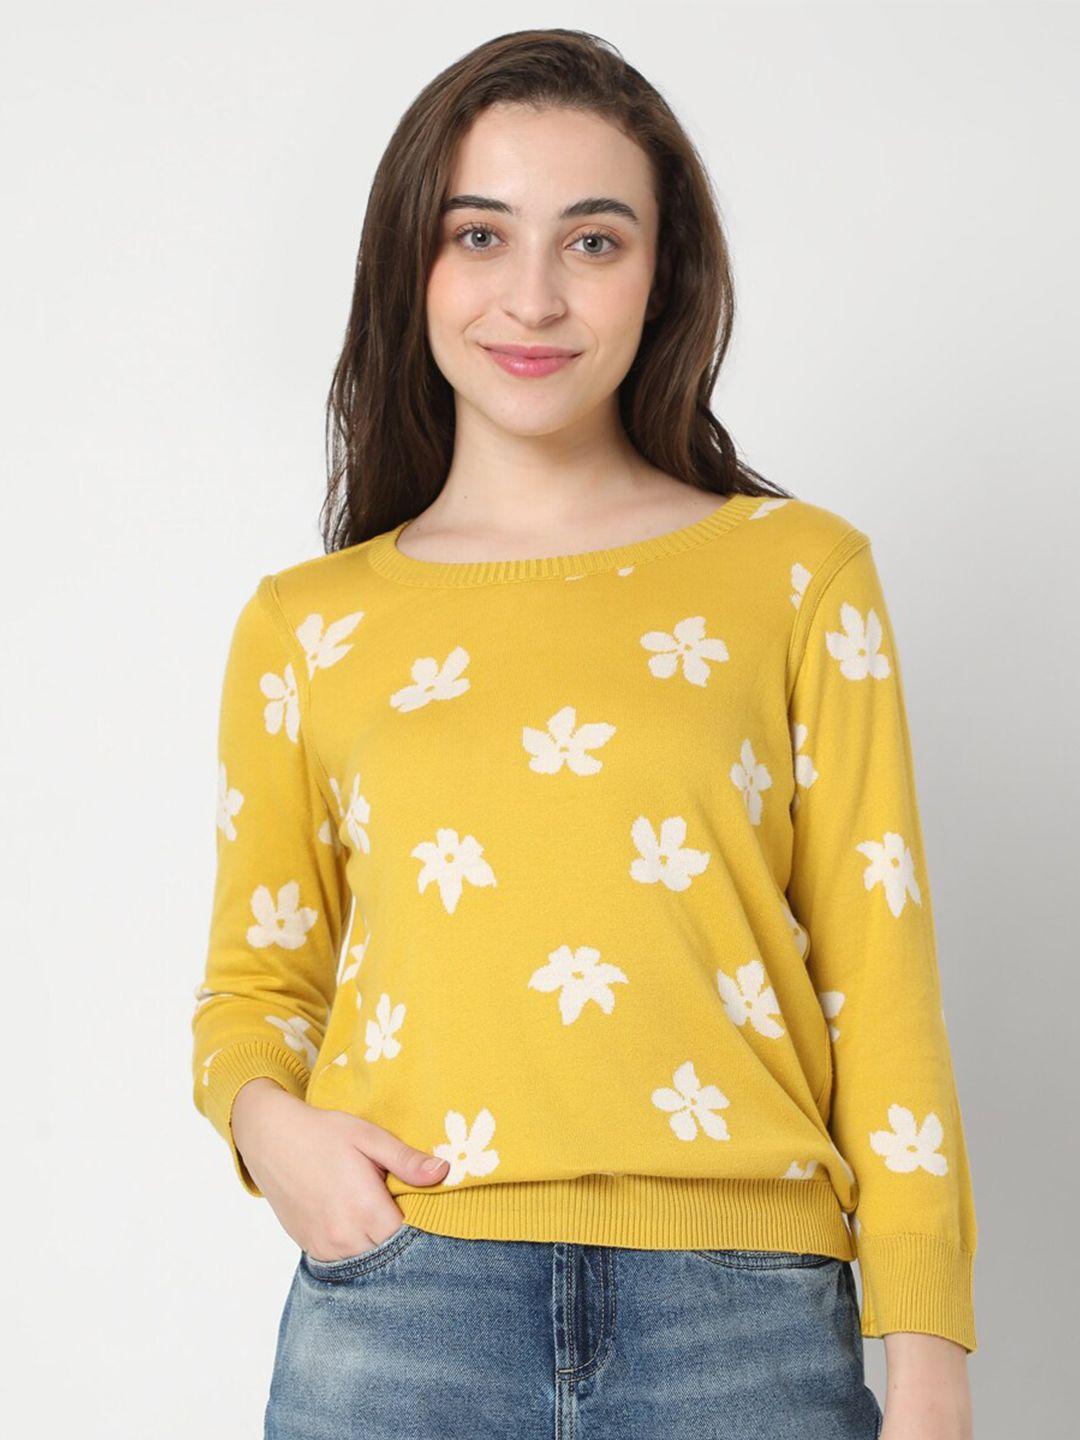 vero-moda-women-yellow-&-white-floral-printed-sweater-vest